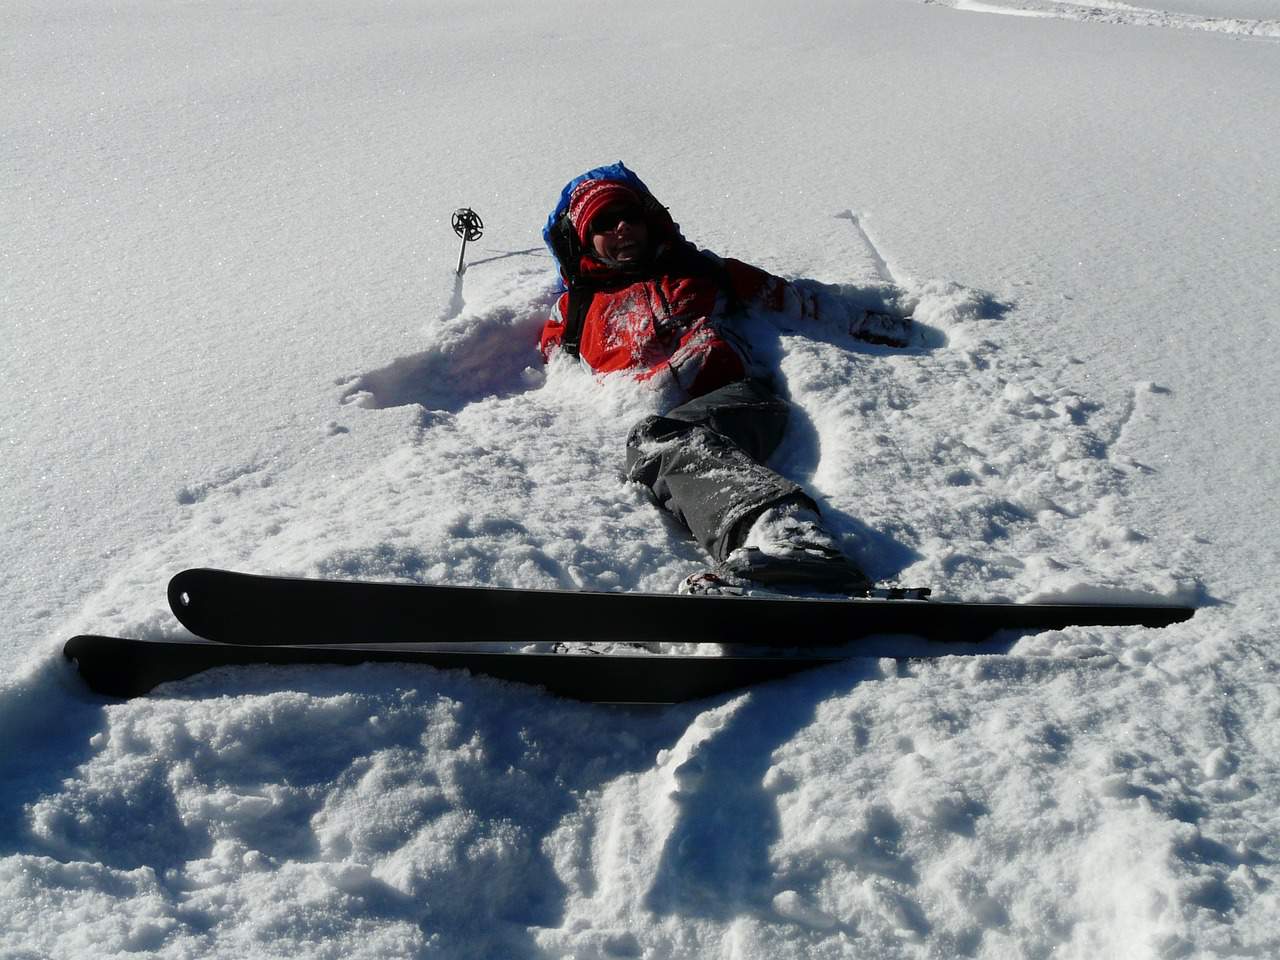 Fallen skier on snow, wearing winter gear and lying on a snowy slope.